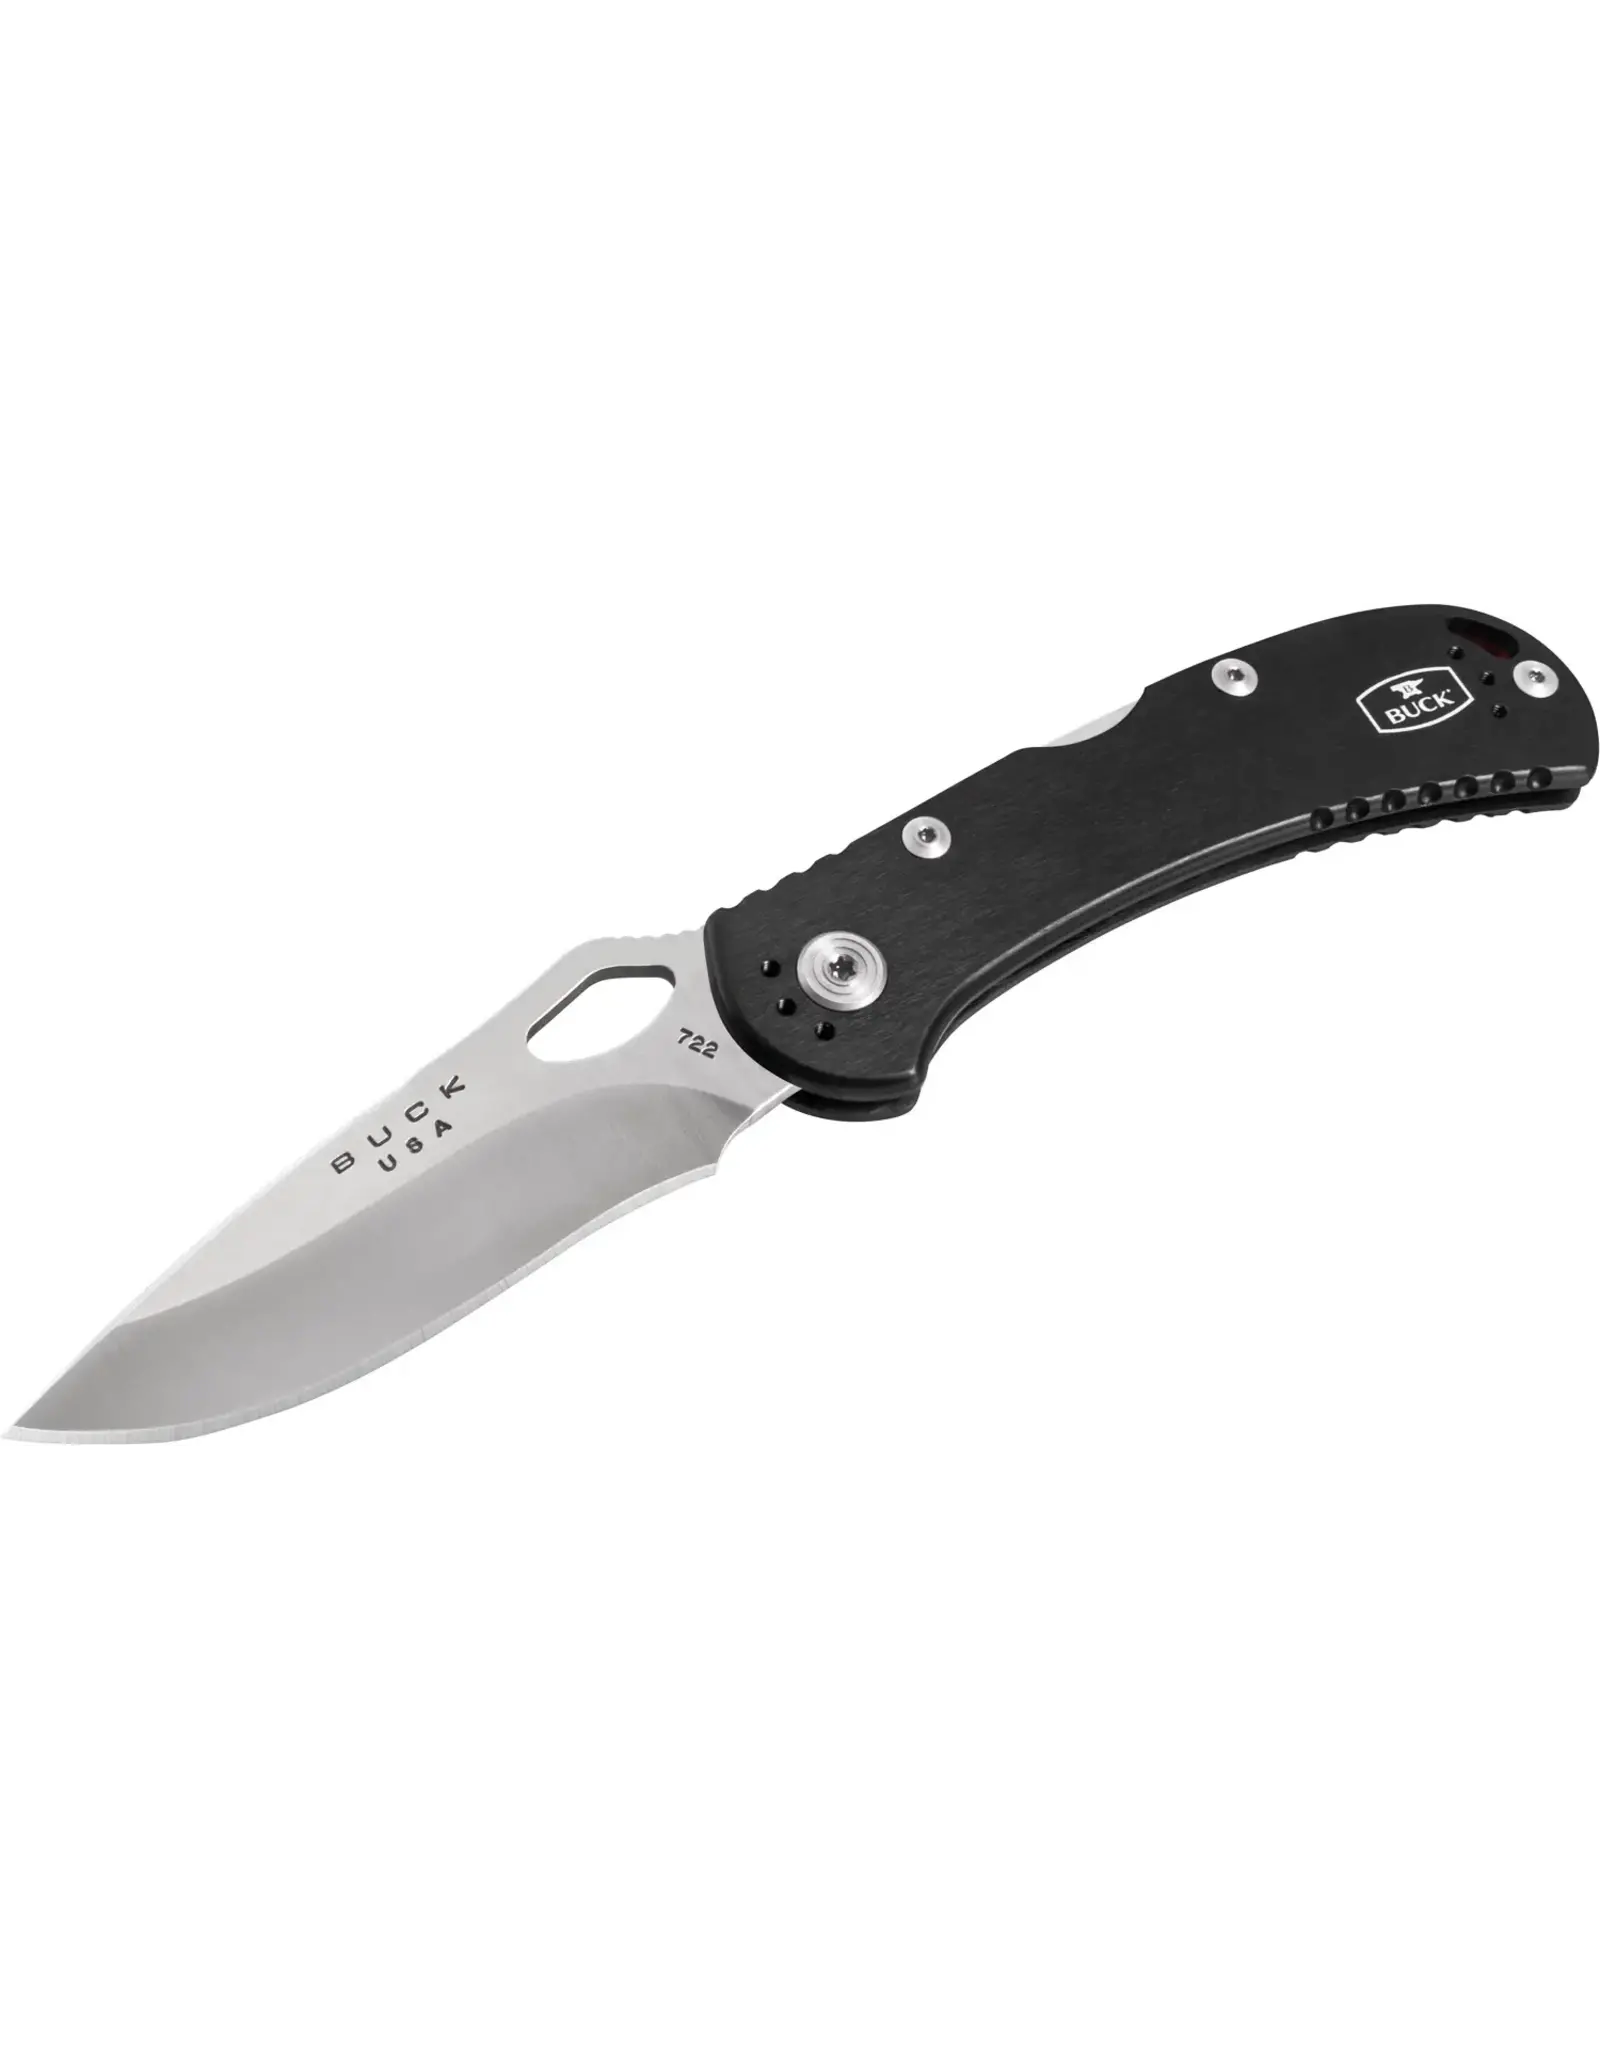 Buck Knives Buck Spitfire Folding Knife, 420HC Steel, Aluminum, 0722BKS1